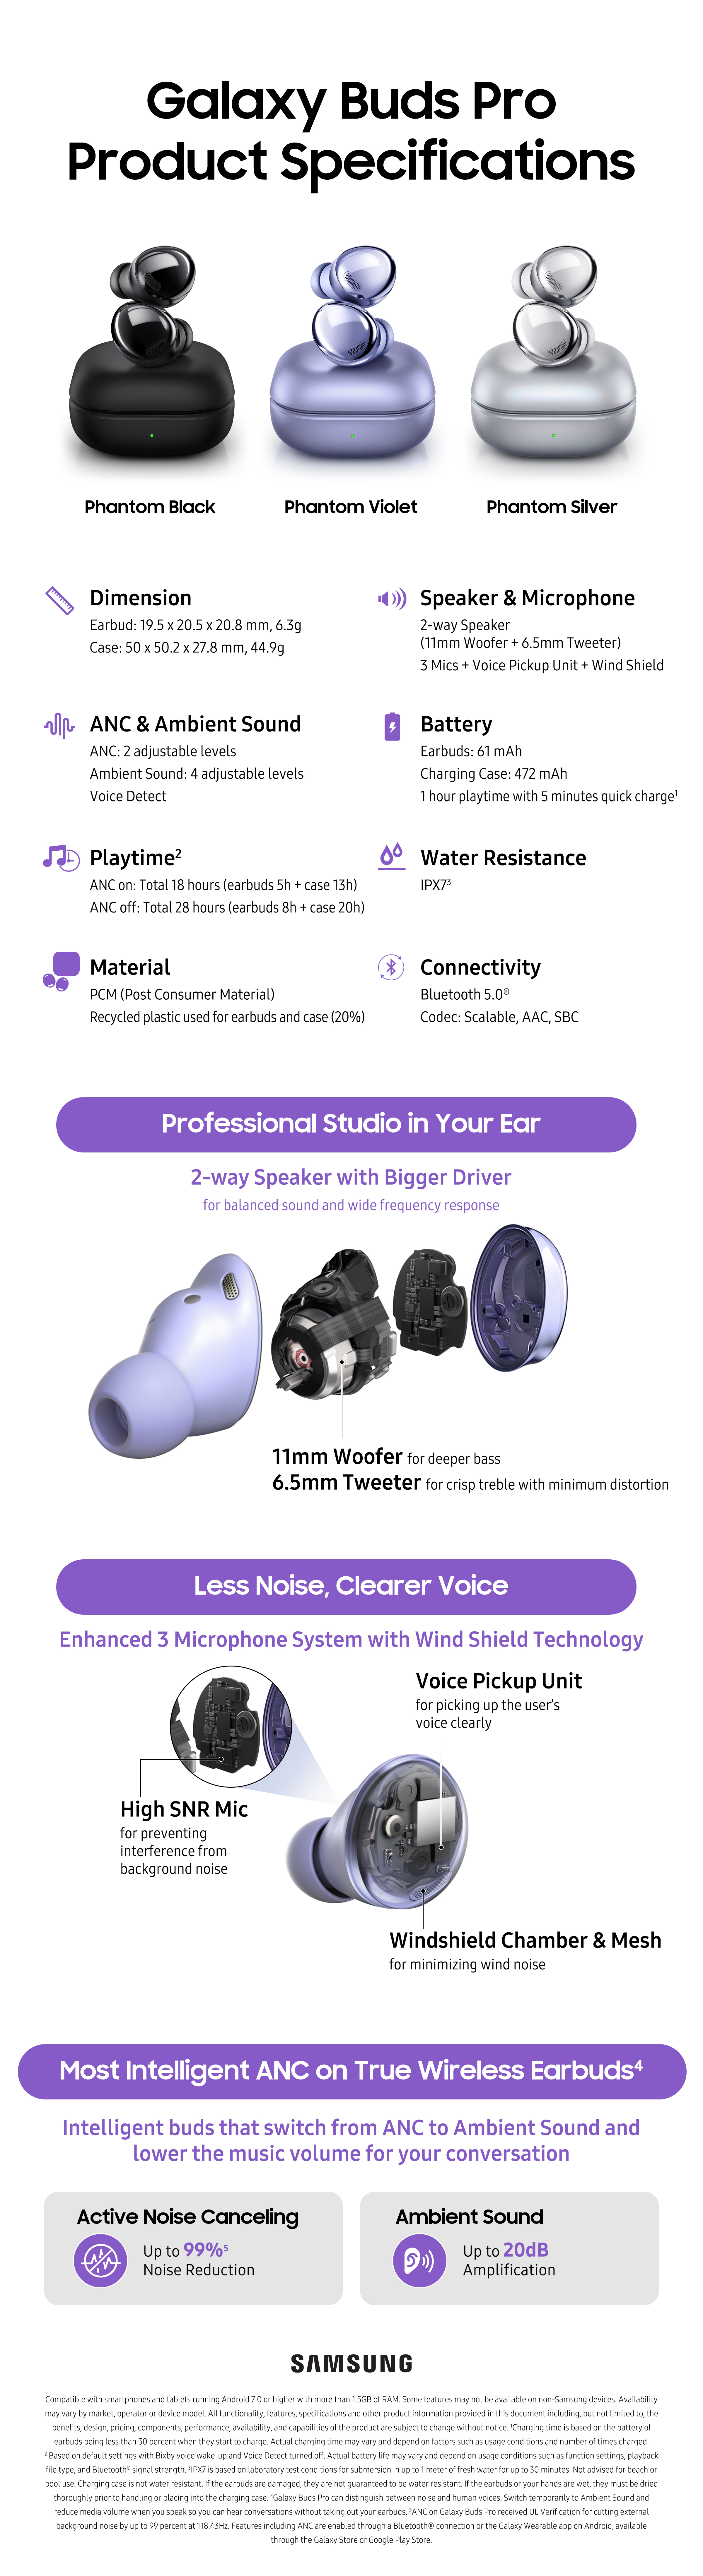 Galaxy Buds Pro spec infographic